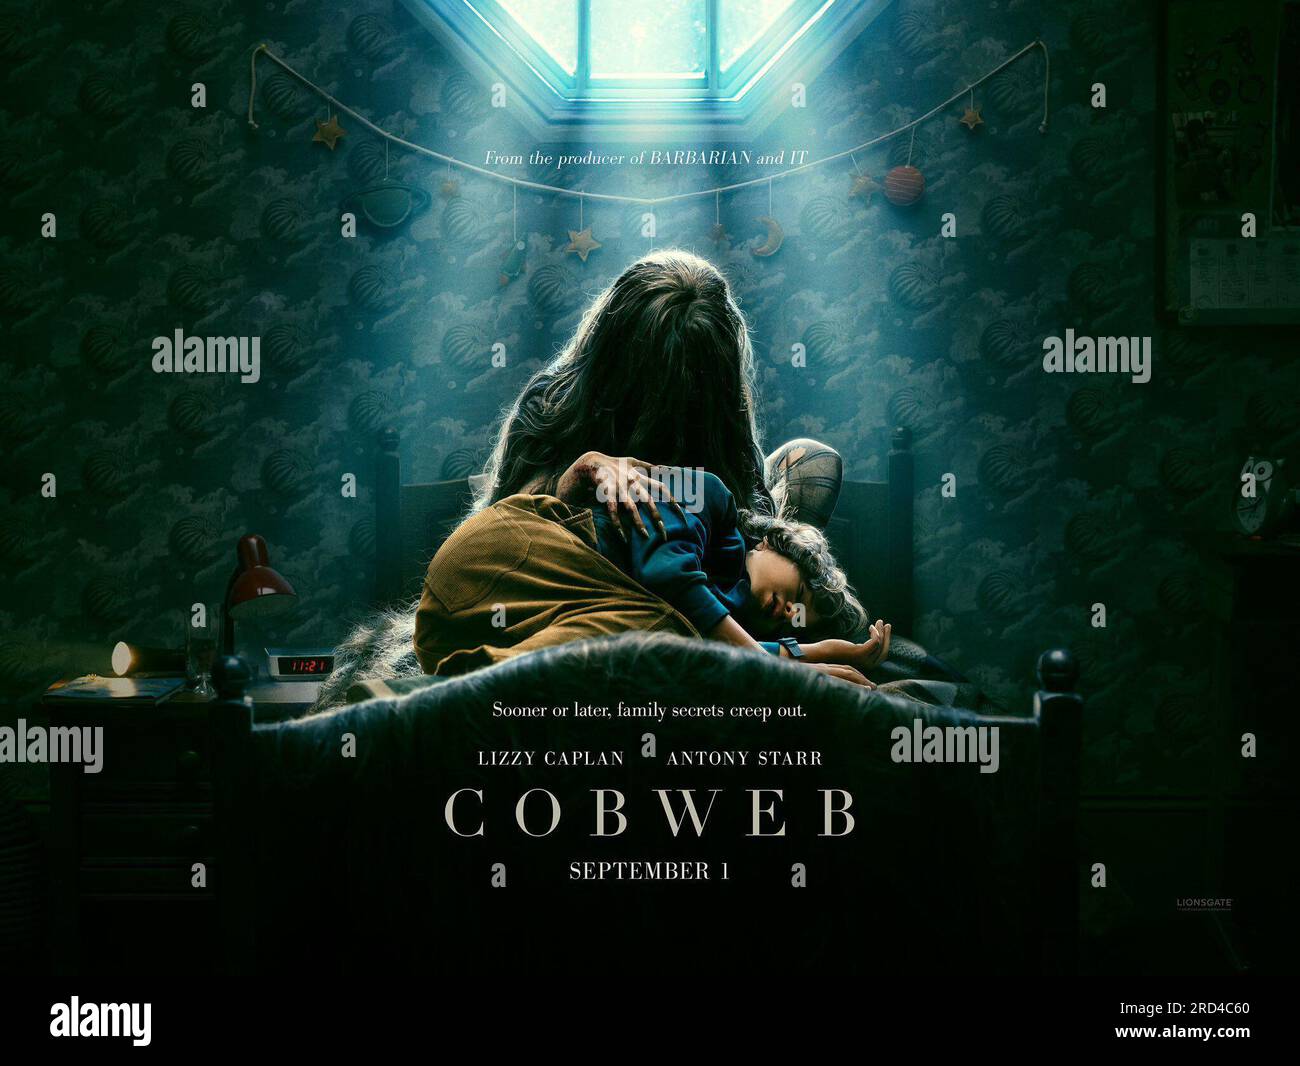 Cobweb film poster Stock Photo